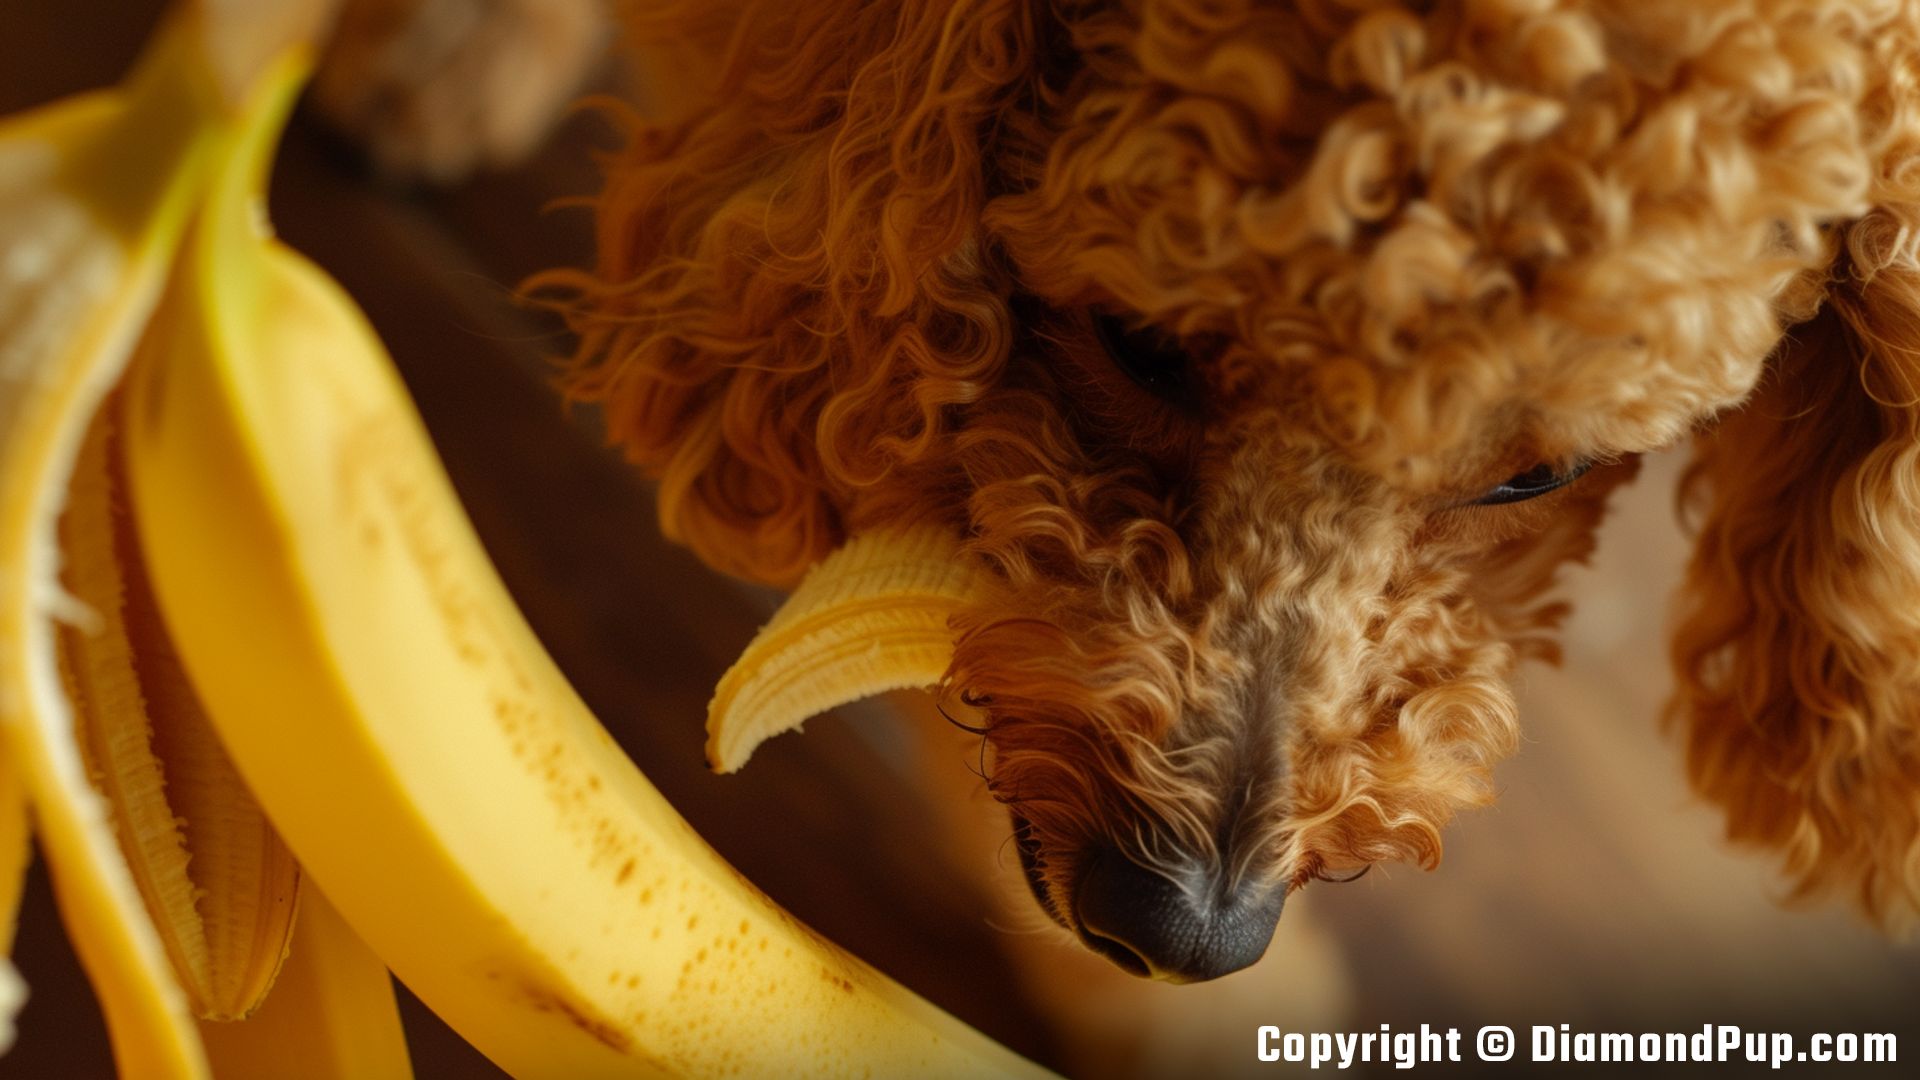 Photograph of an Adorable Poodle Snacking on Banana